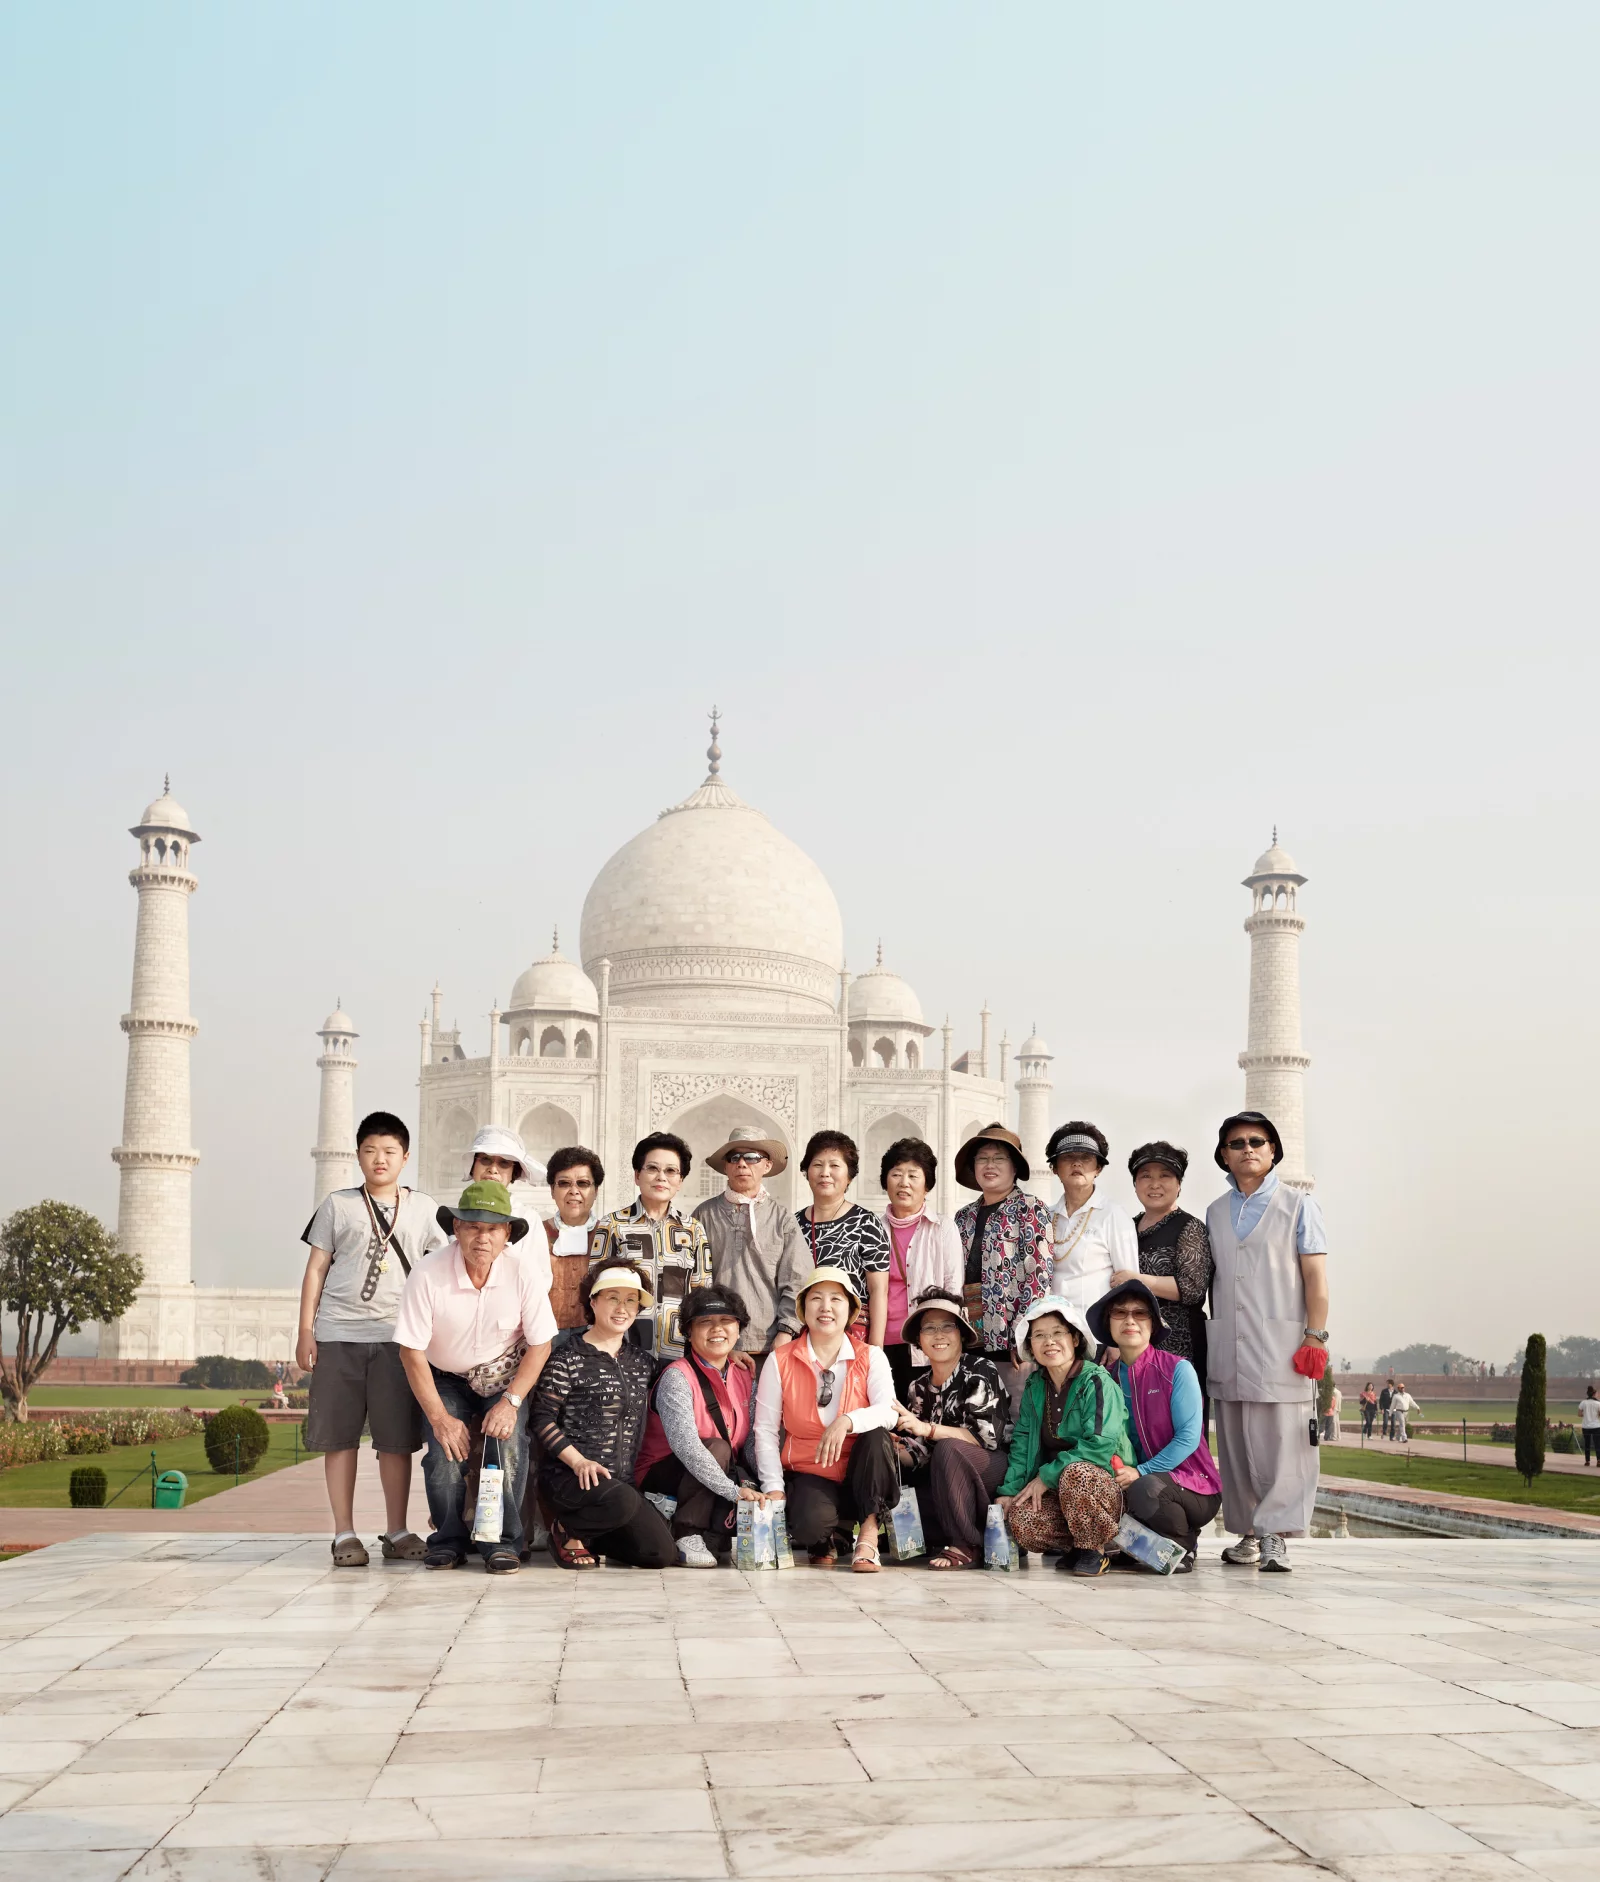 The Taj Mahal 2 by Clemens ASCHER